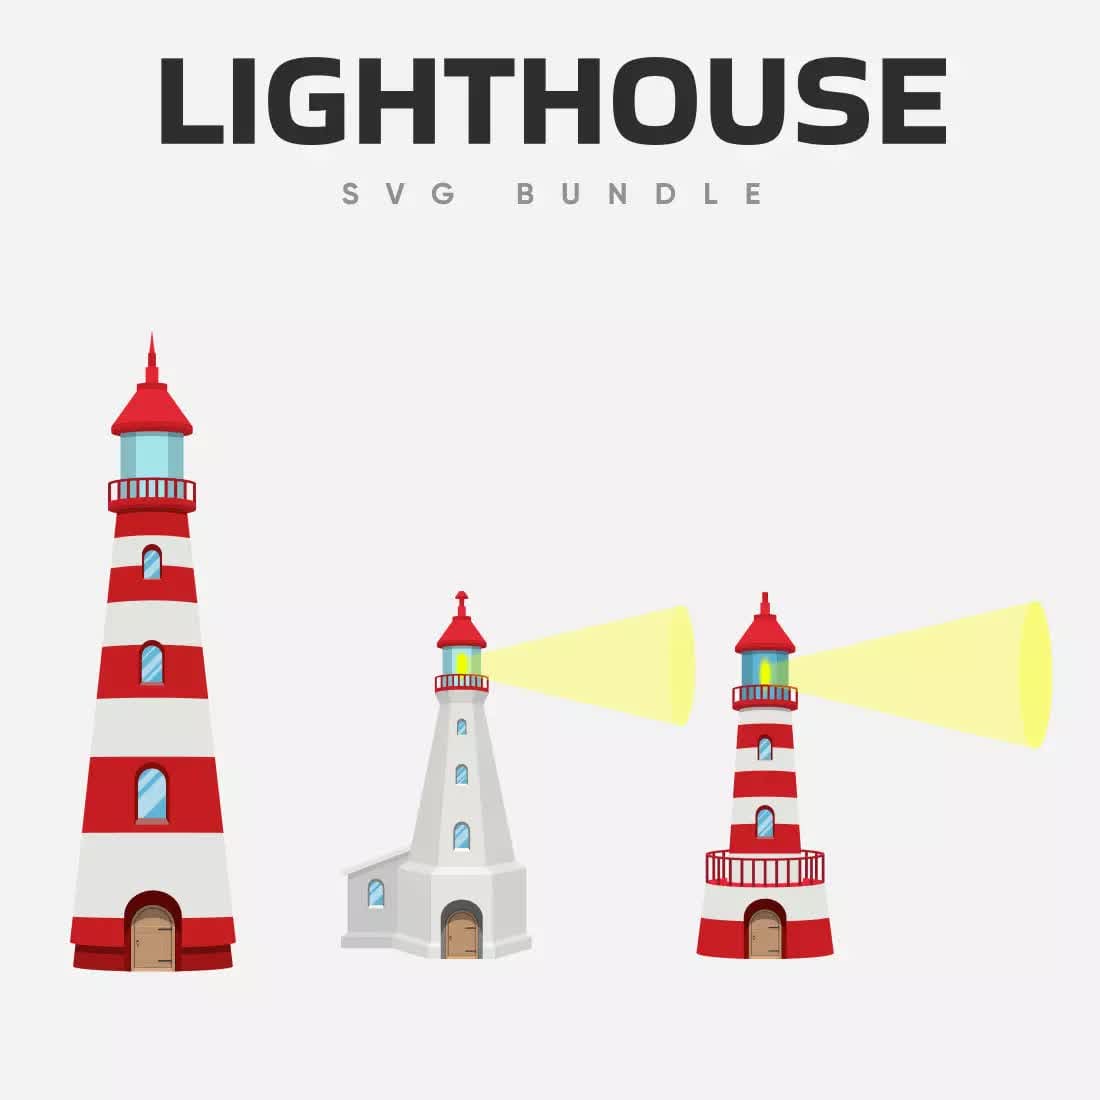 Lighthouse SVG Bundle Preview 1.